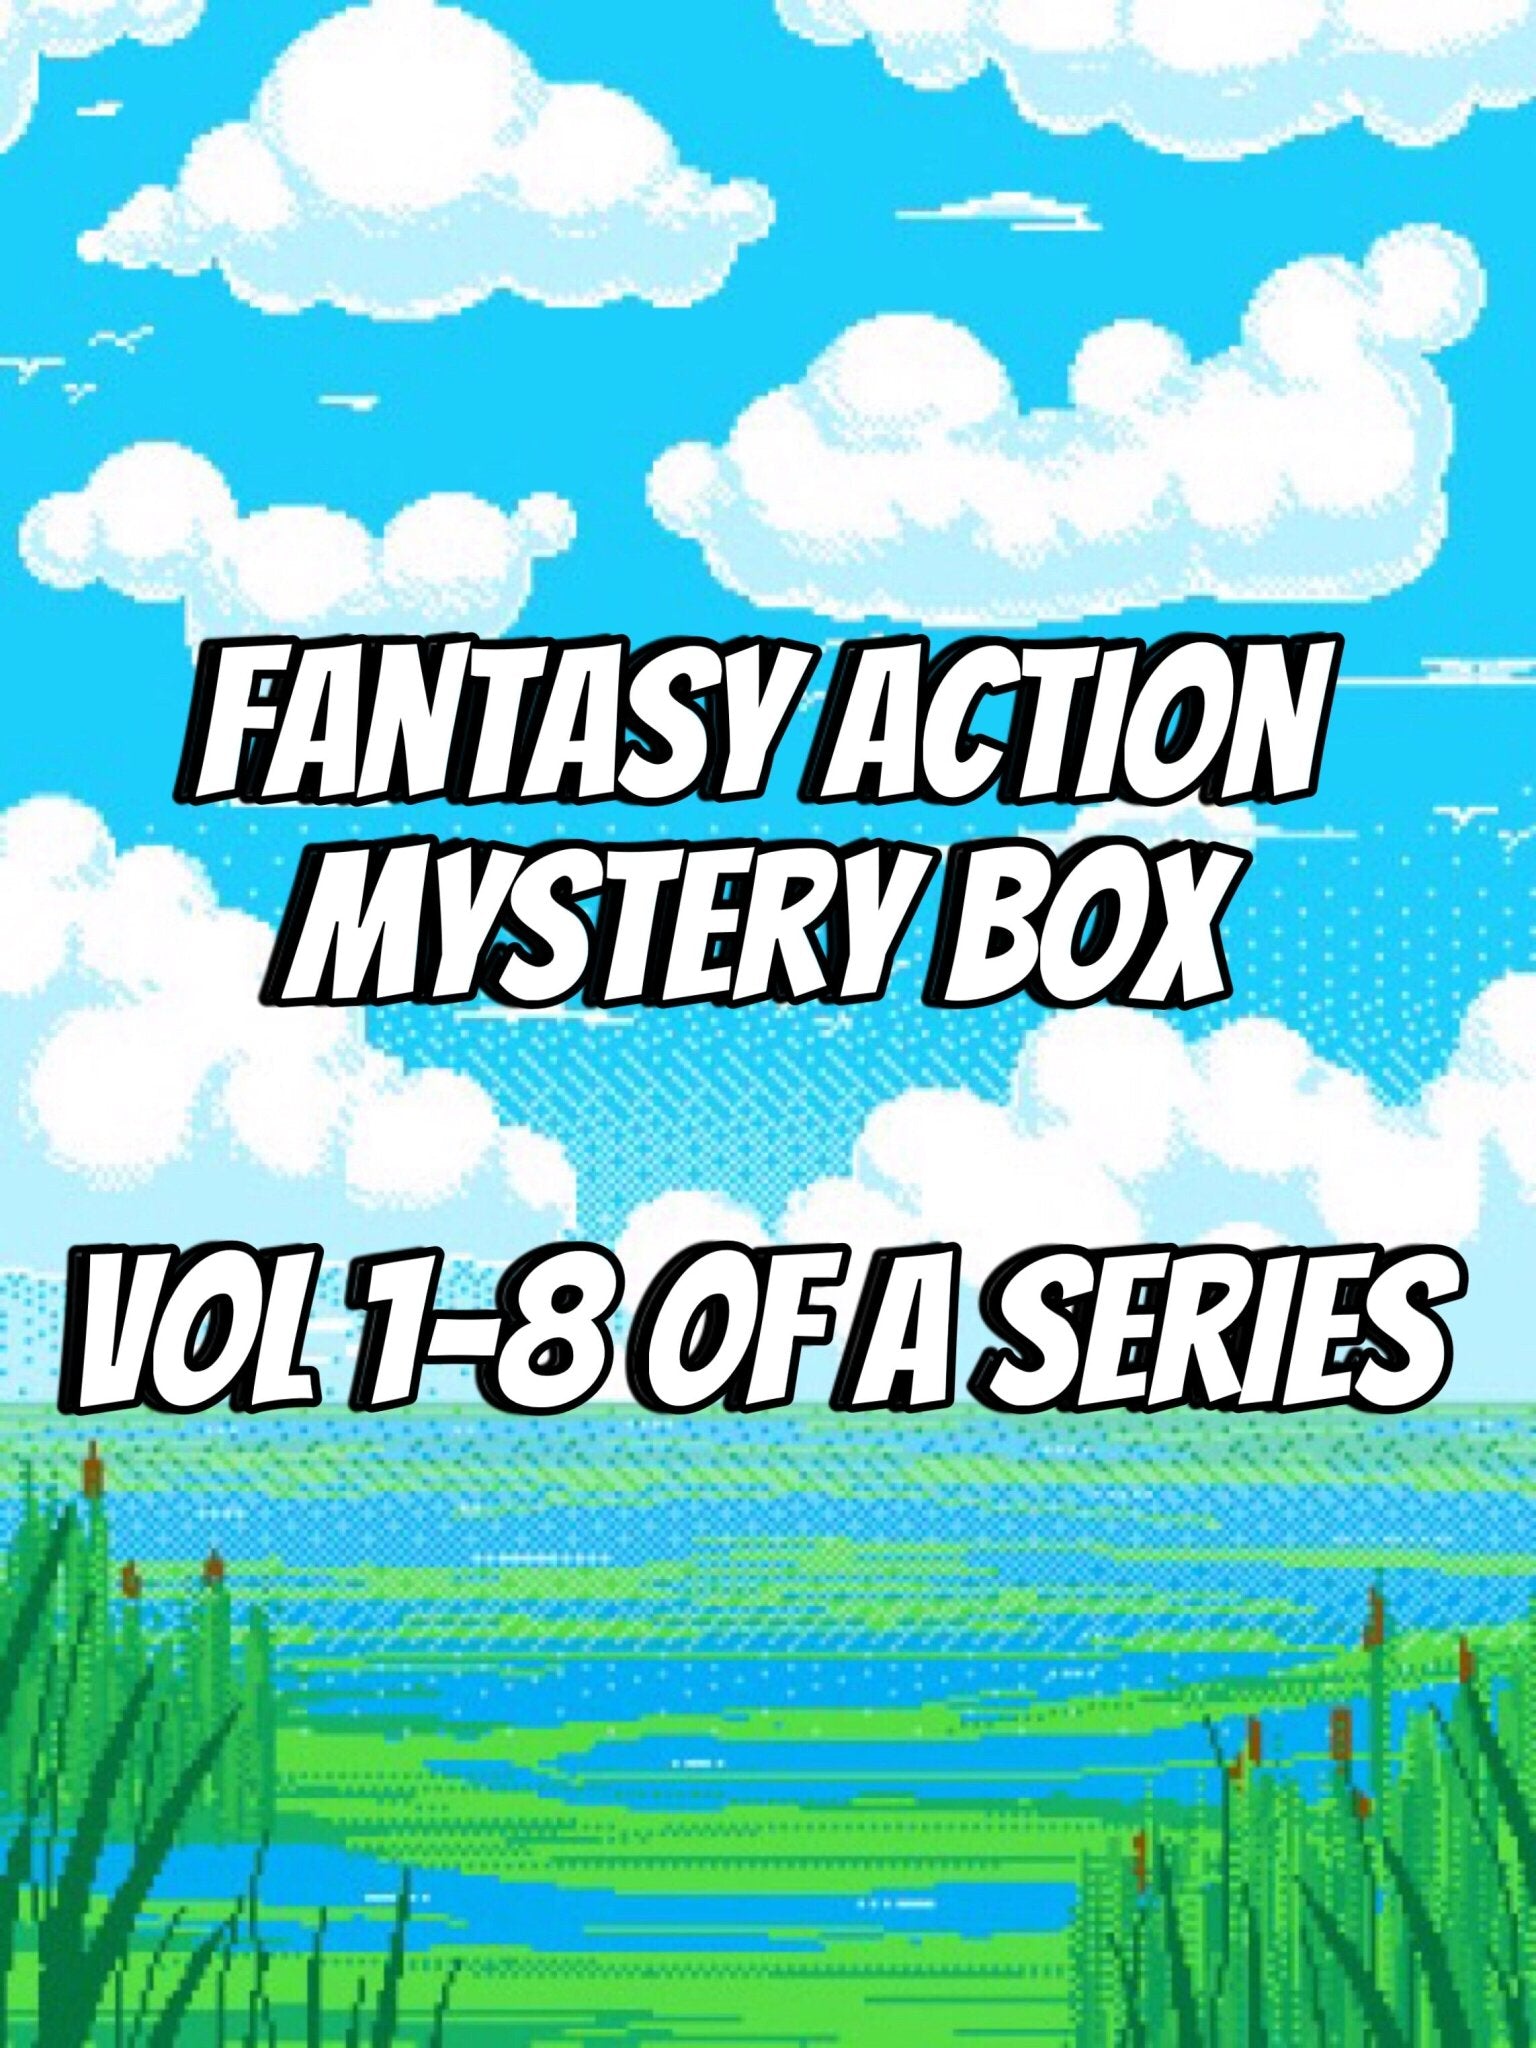 Fantasy Action Themed Volumes 1-8 Mystery Manga Box - English Mixed Manga